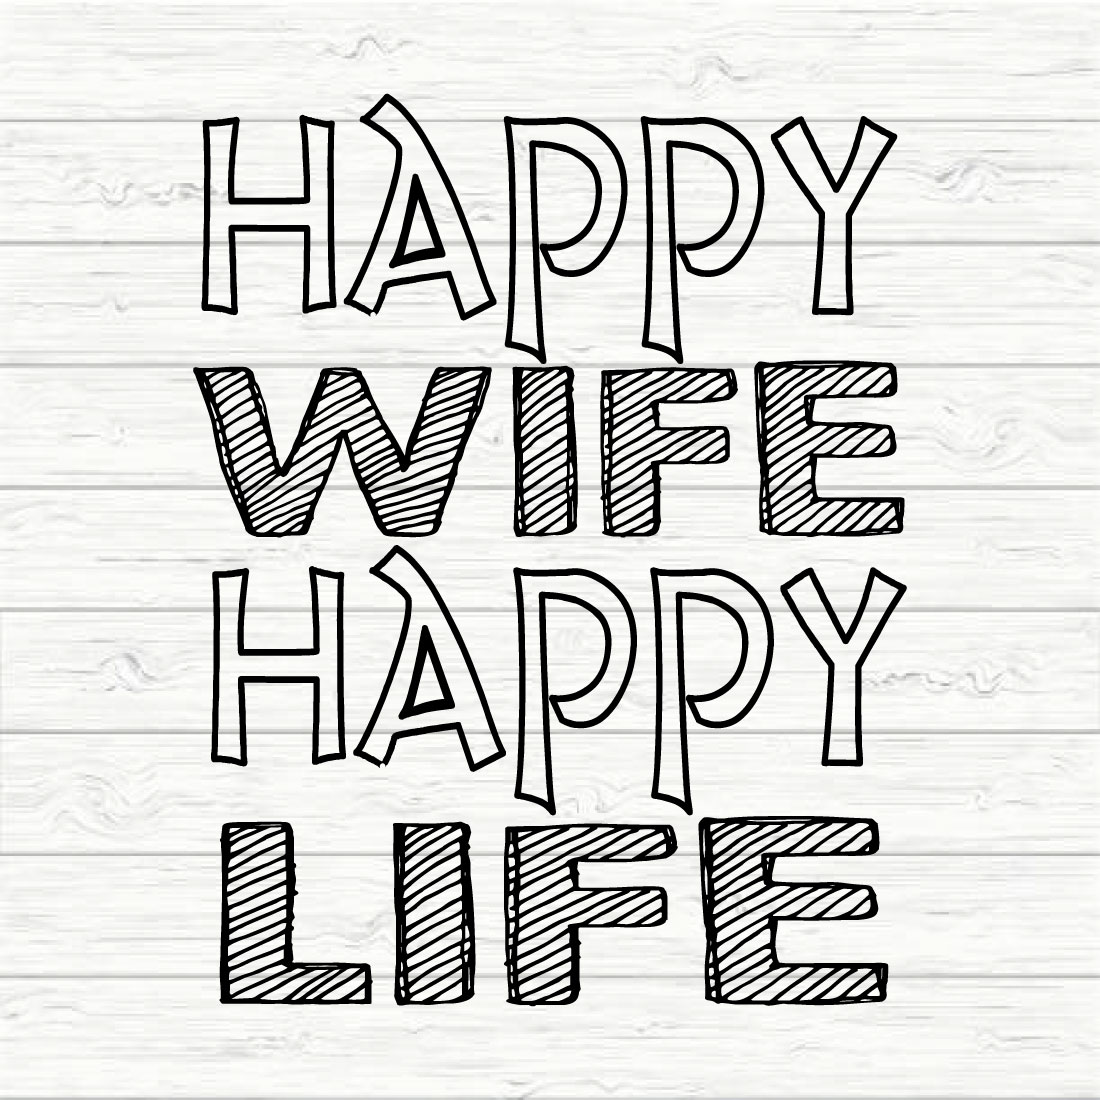 Happy Wife Happy Life cover image.